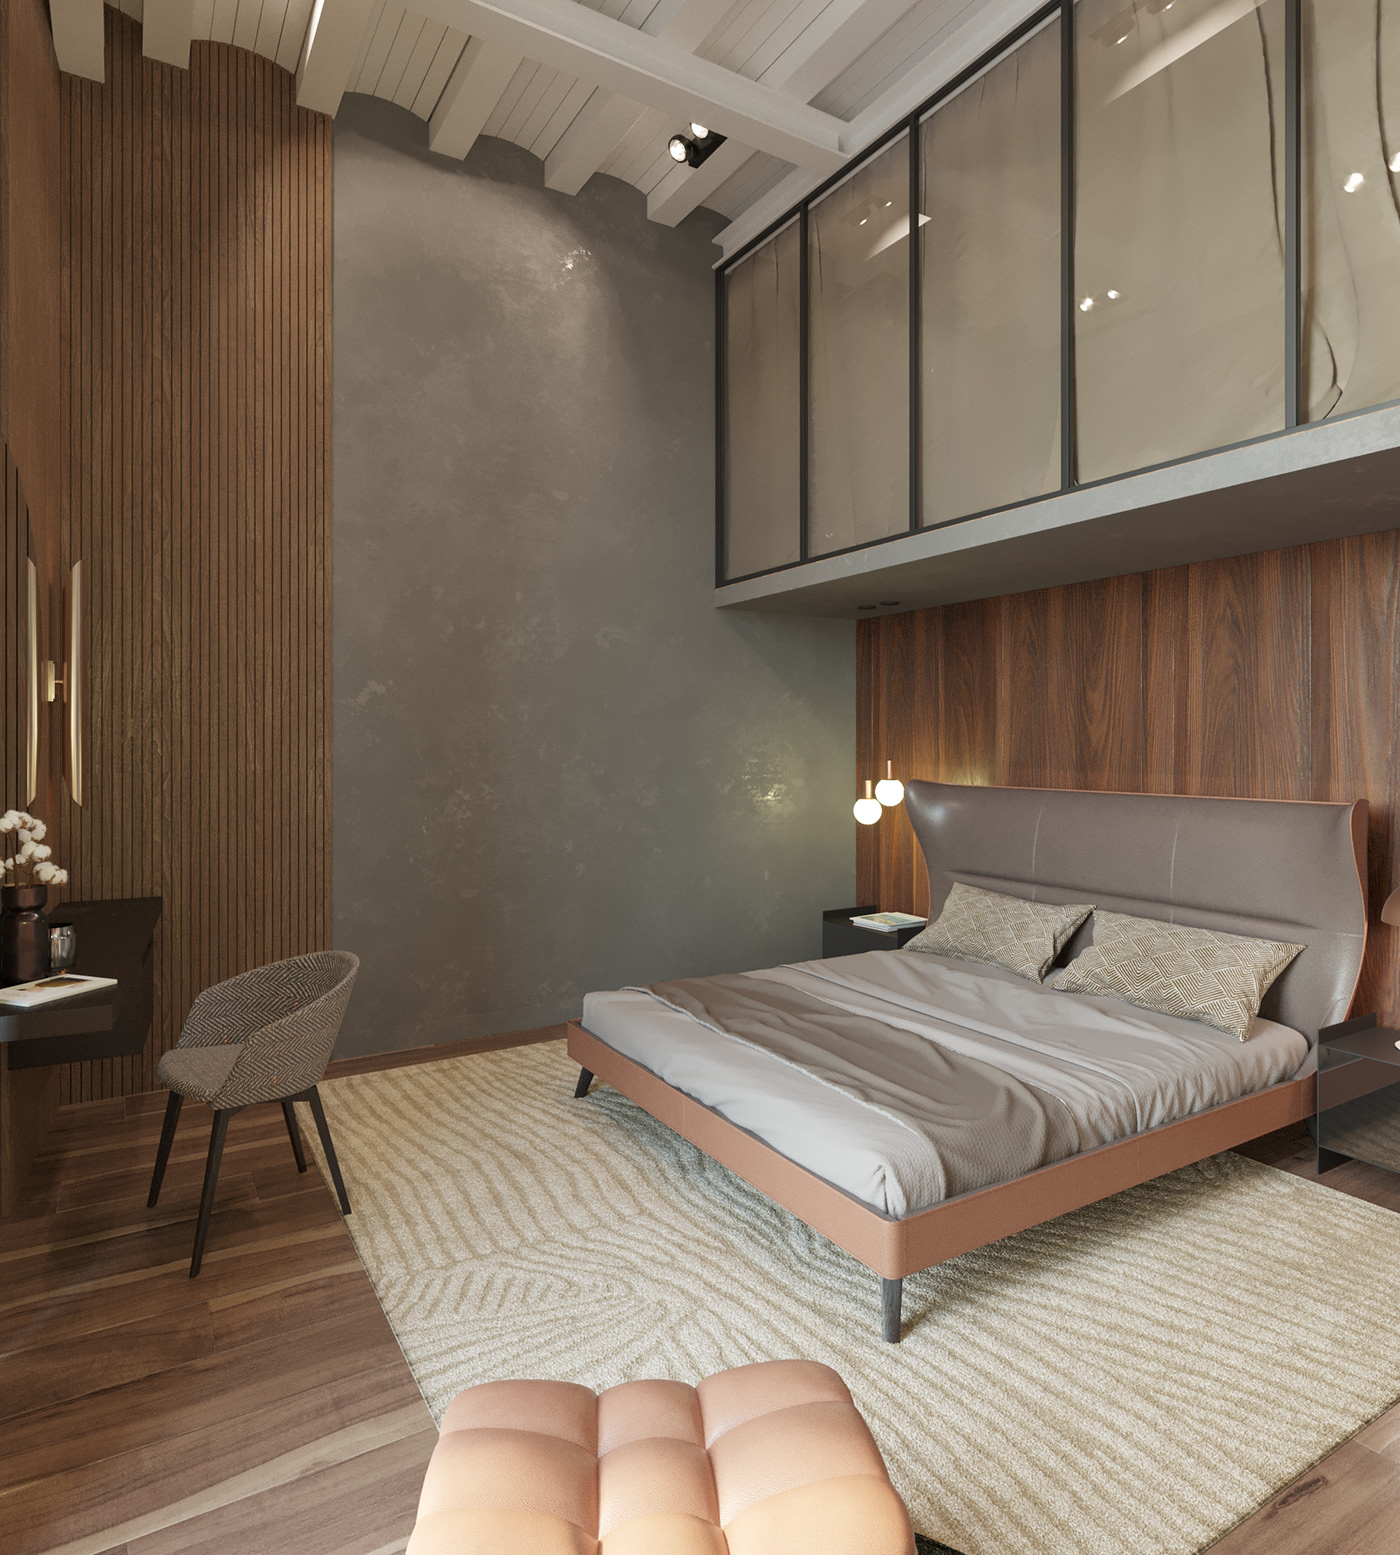 spain Interior visualization 3dsmax corona renderer apartment big room 150sq.m.